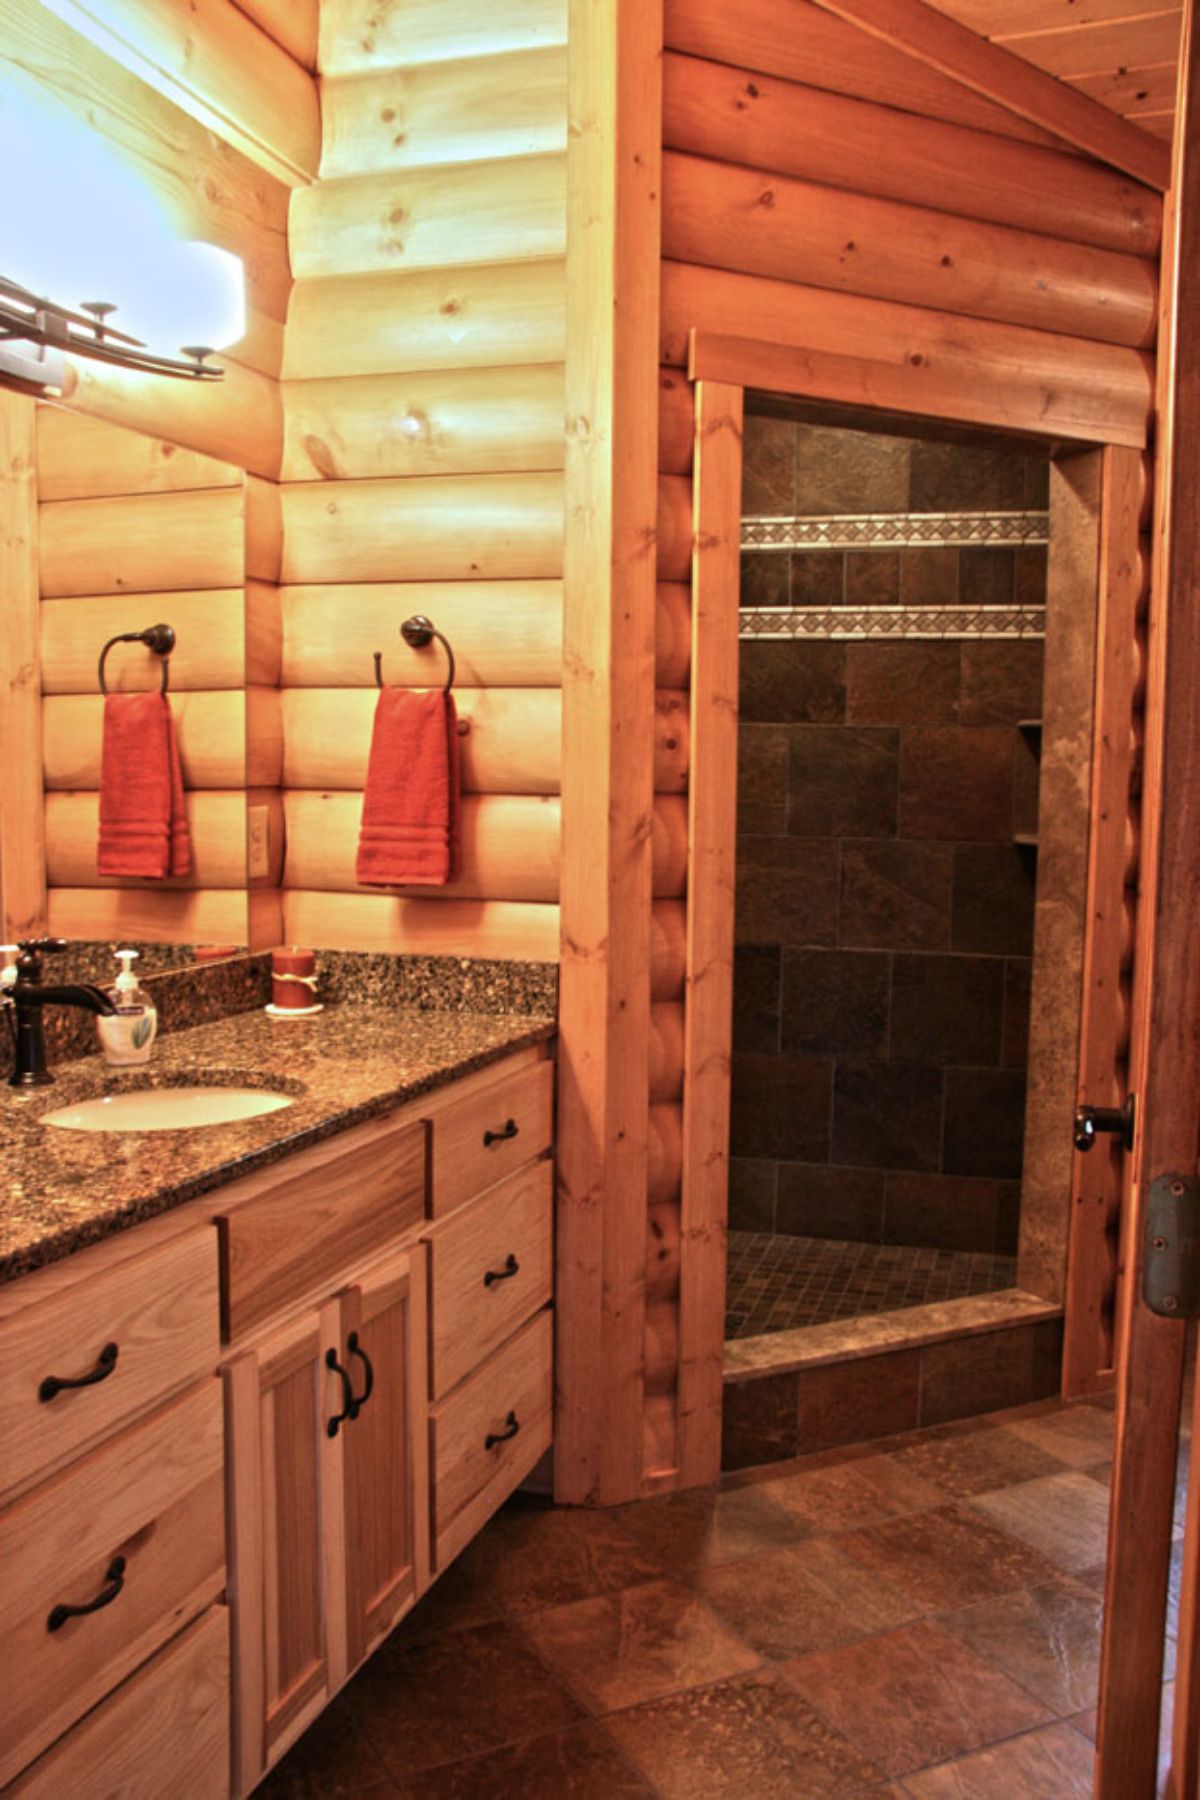 glass door n corner shower in log cabin bathroom with white sink in dark granite counter